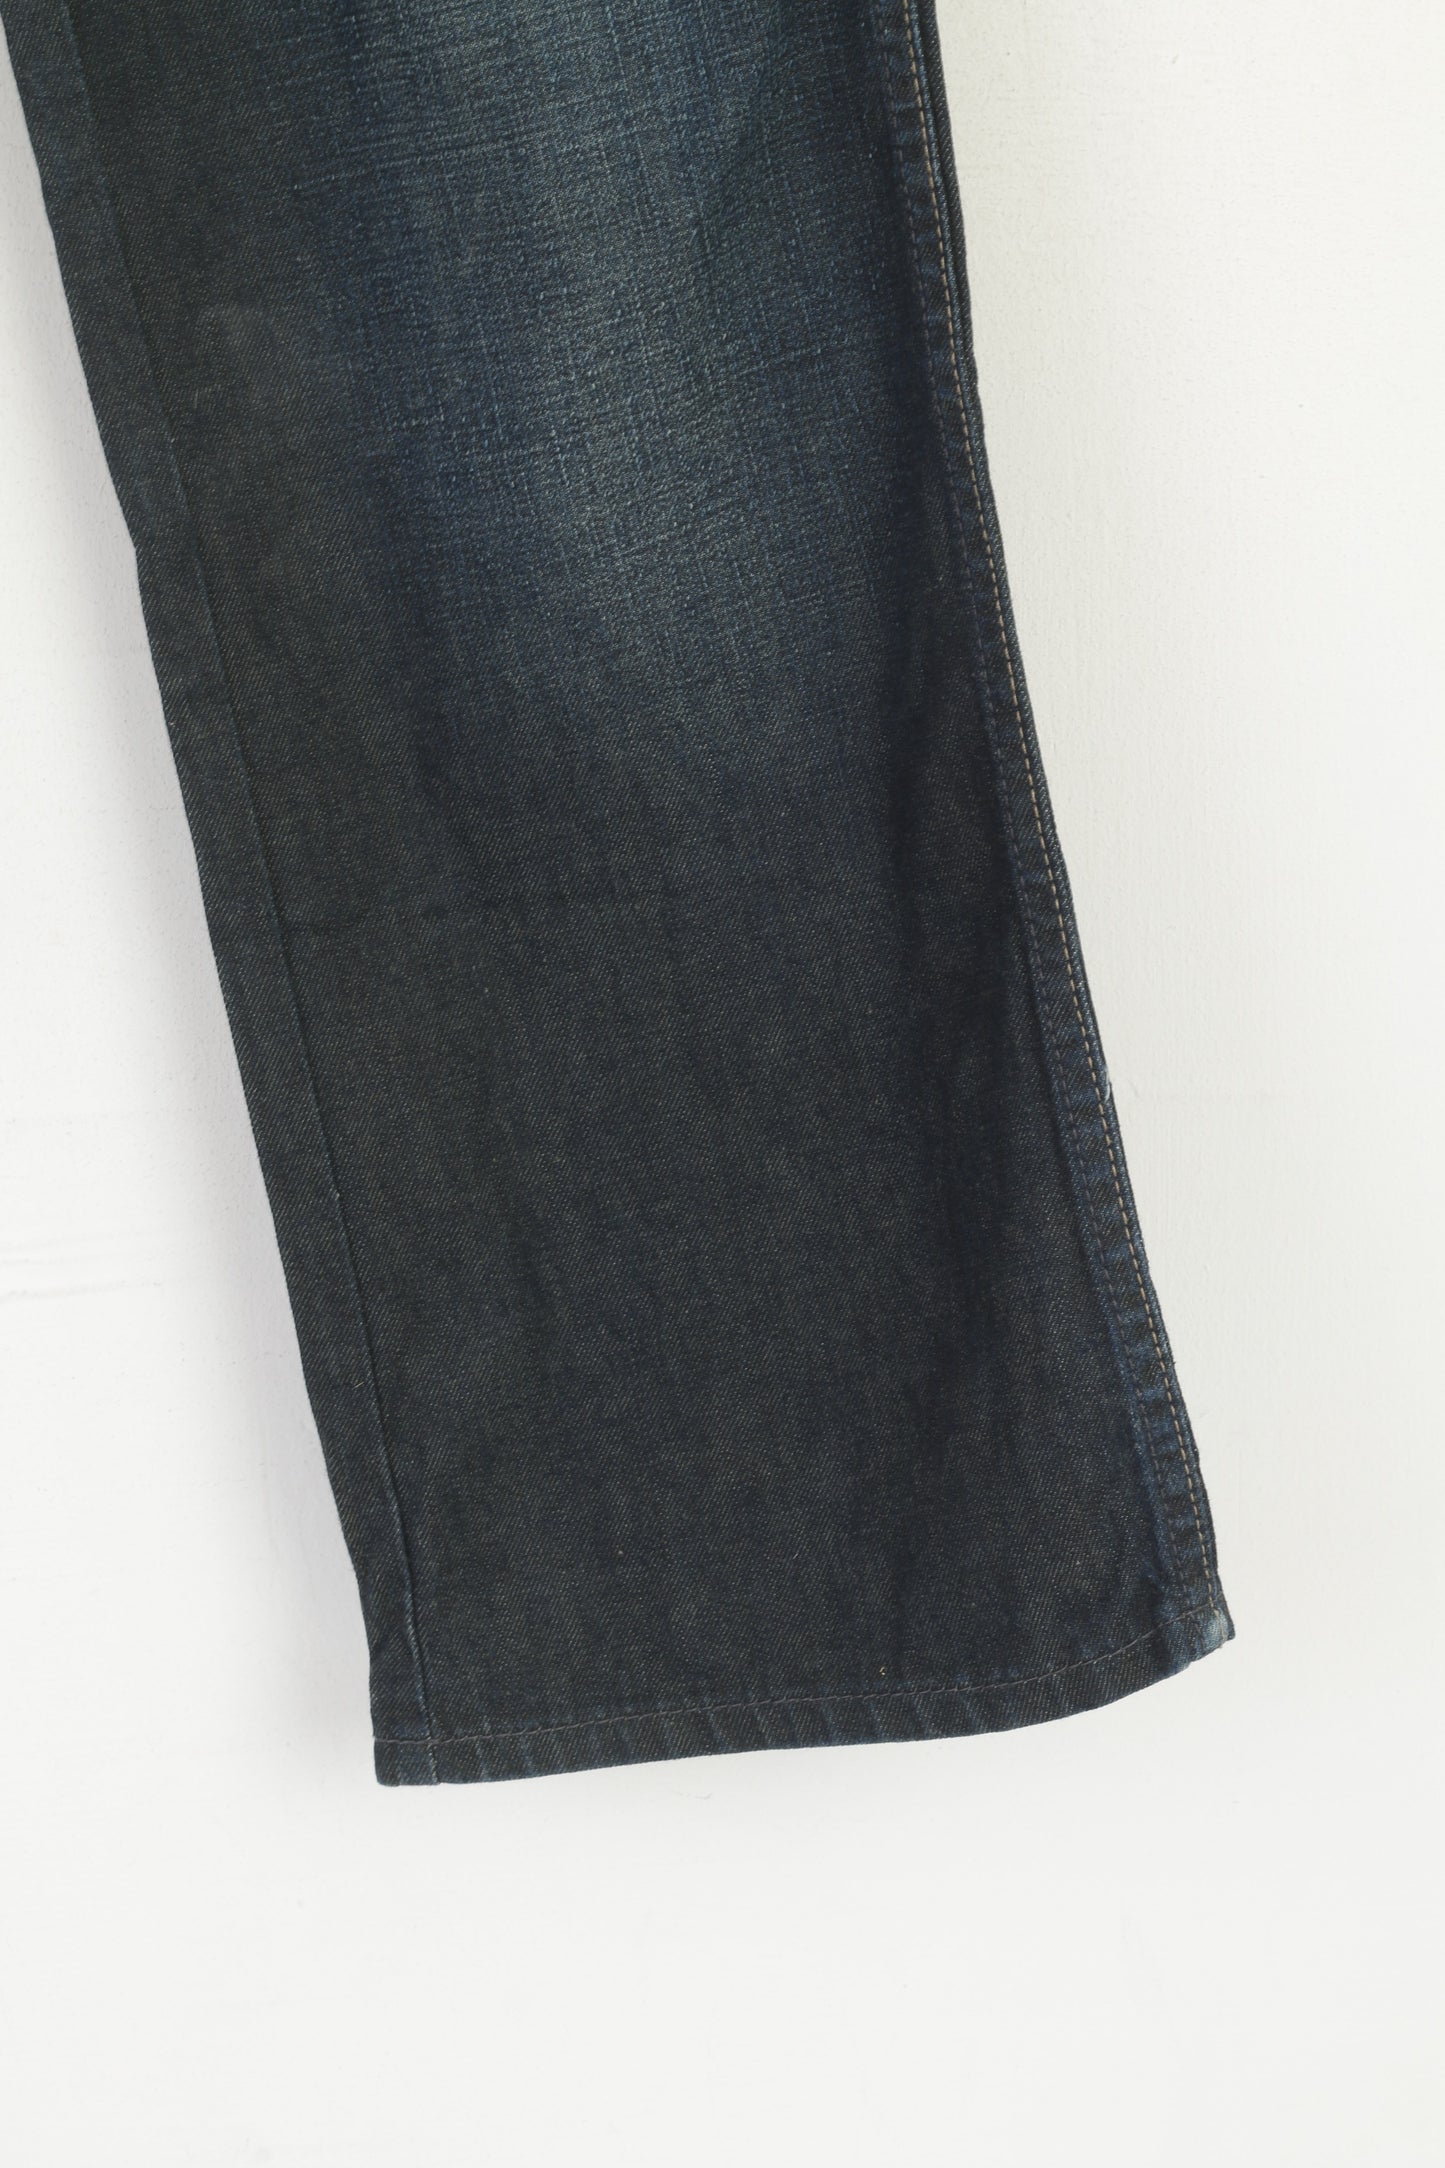 Wrangler Men 36 Jeans Trousers Navy Denim Cotton Vintage Roxboro Classic Pants